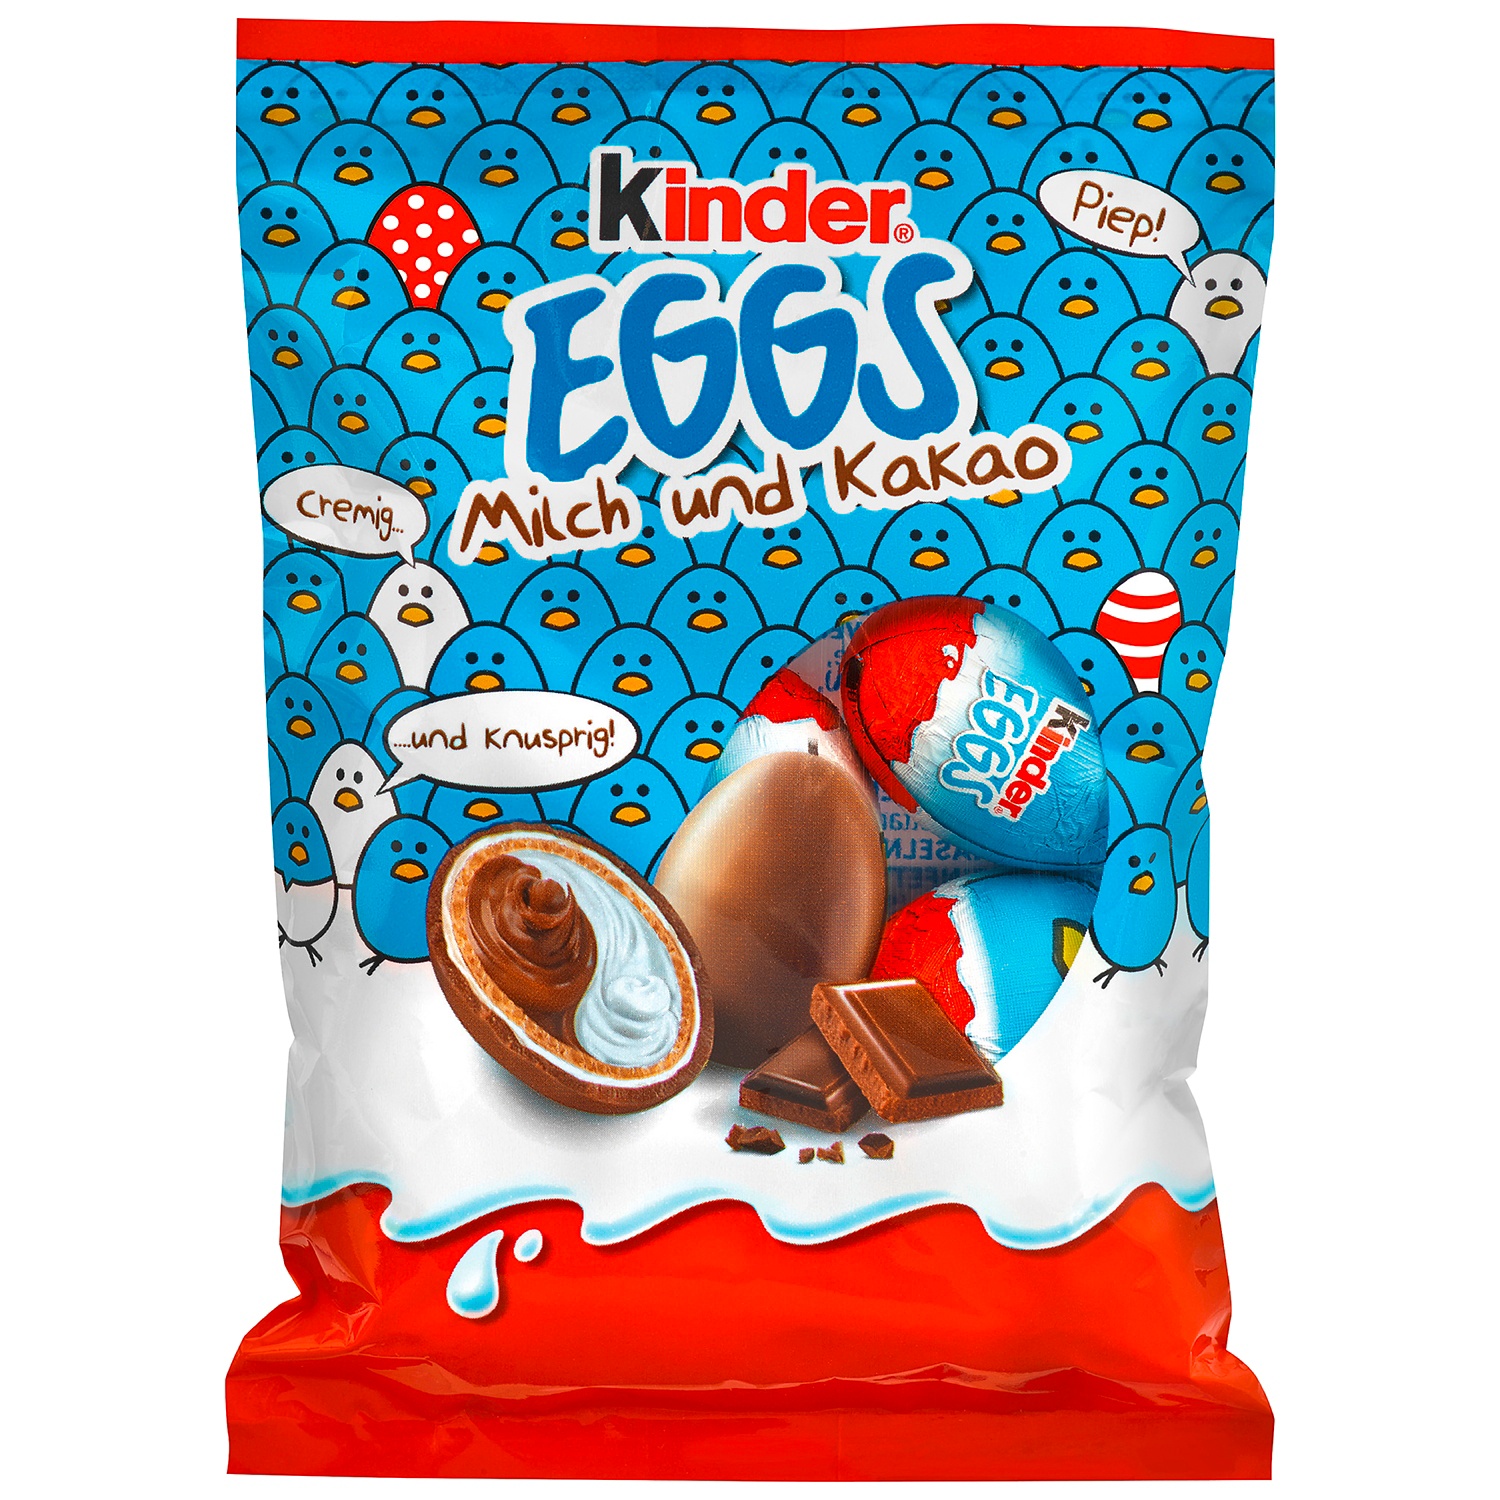 KINDER Eggs, Kakao